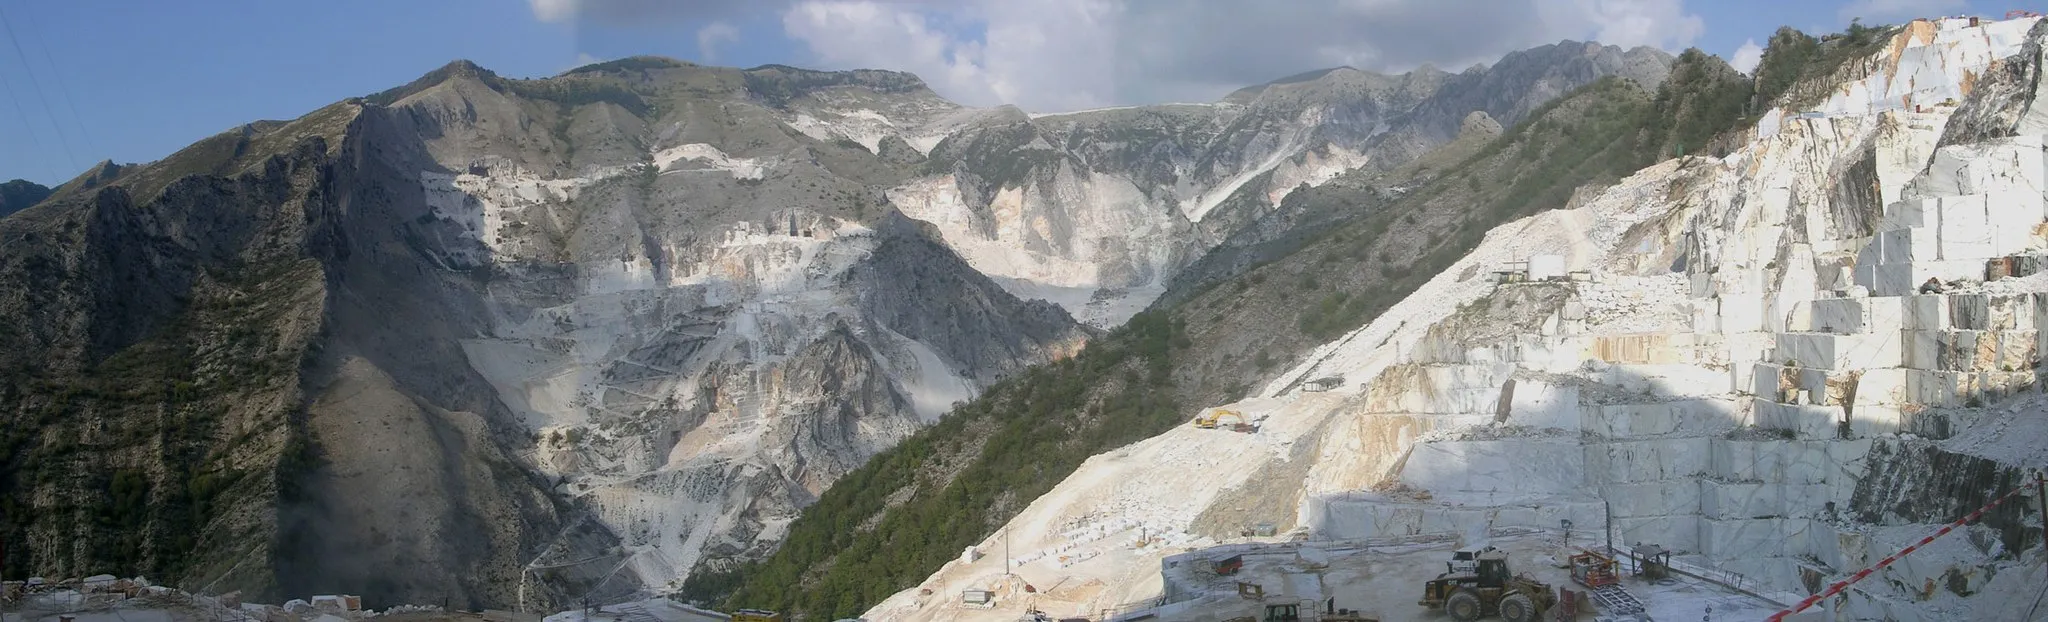 Image de Carrara